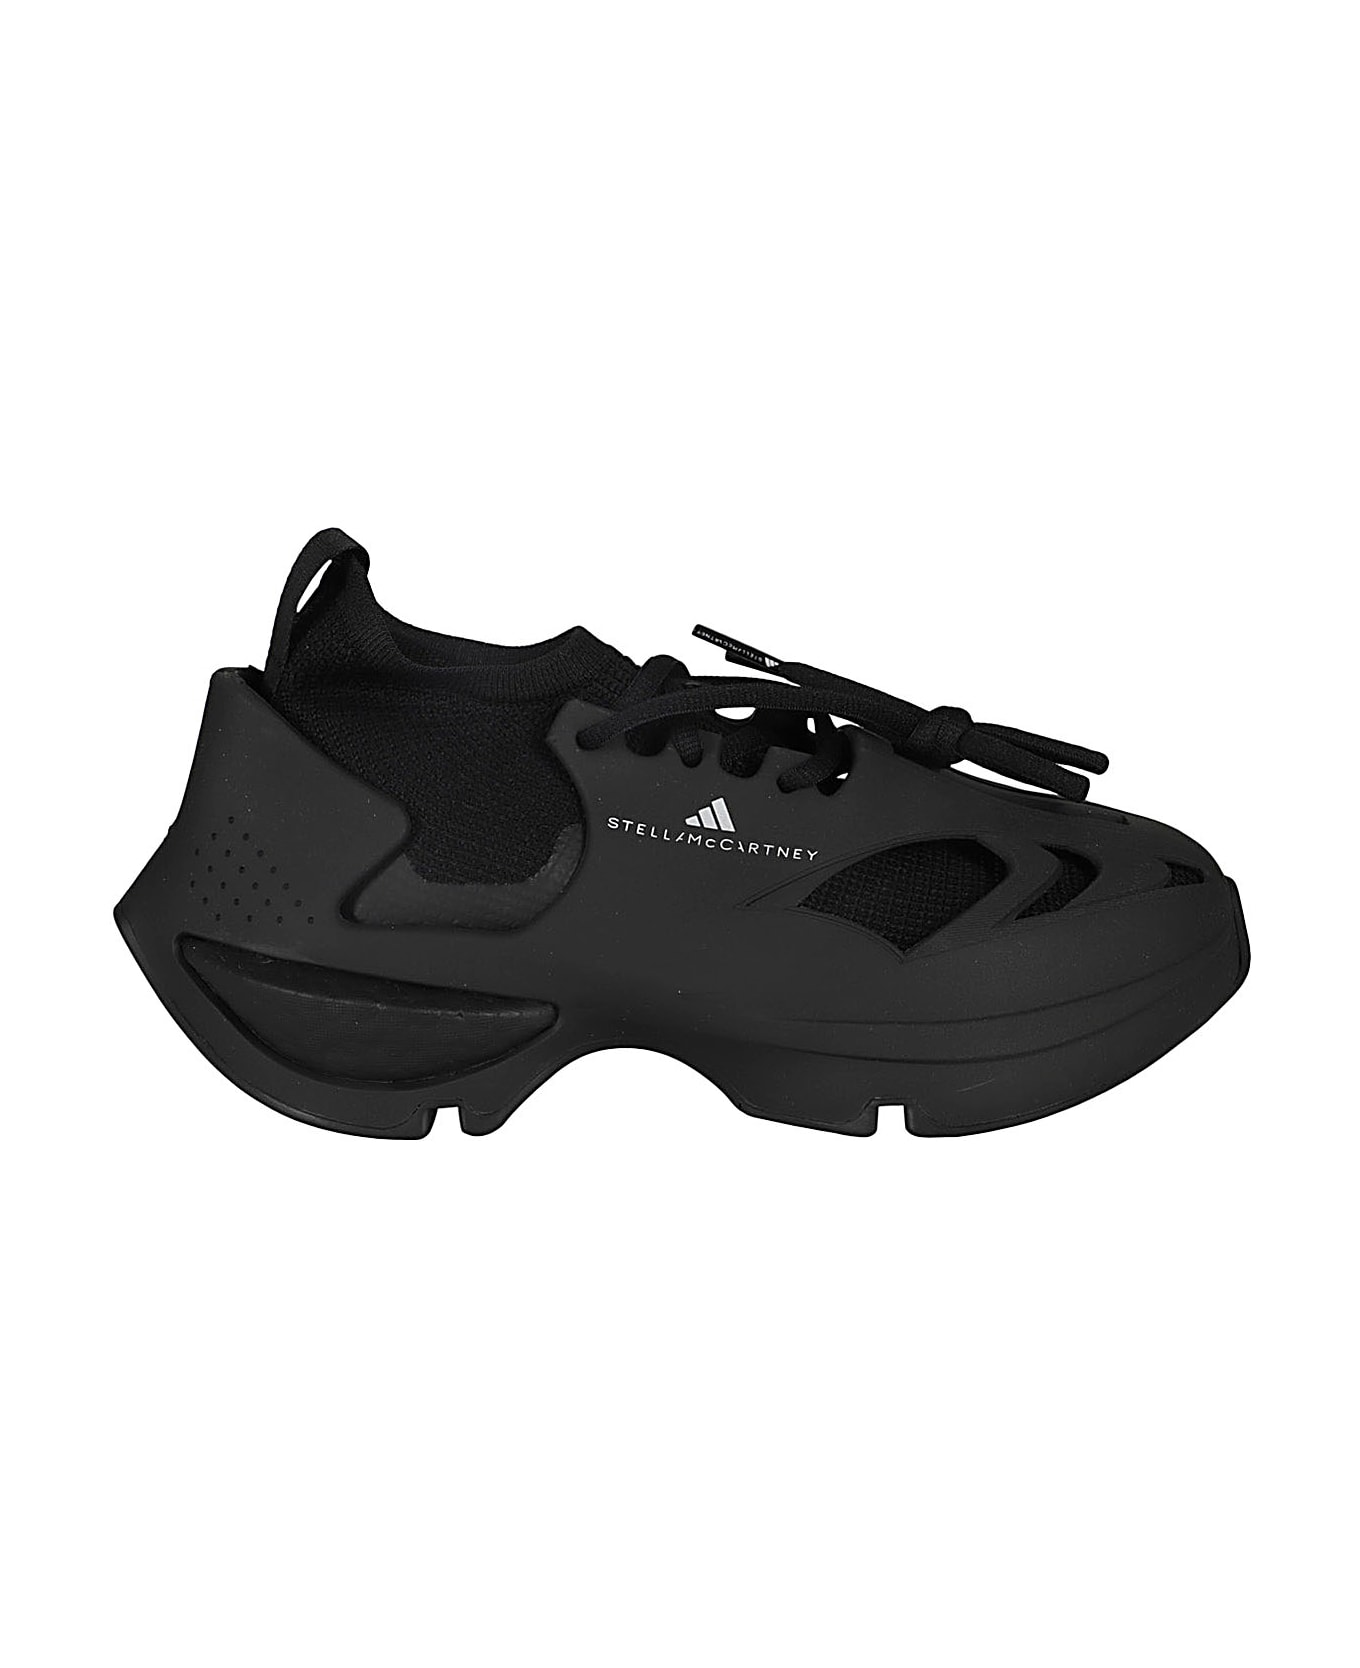 Adidas by Stella McCartney Sportwear Run Sneakers - COBLFTWRWHCOBLACK